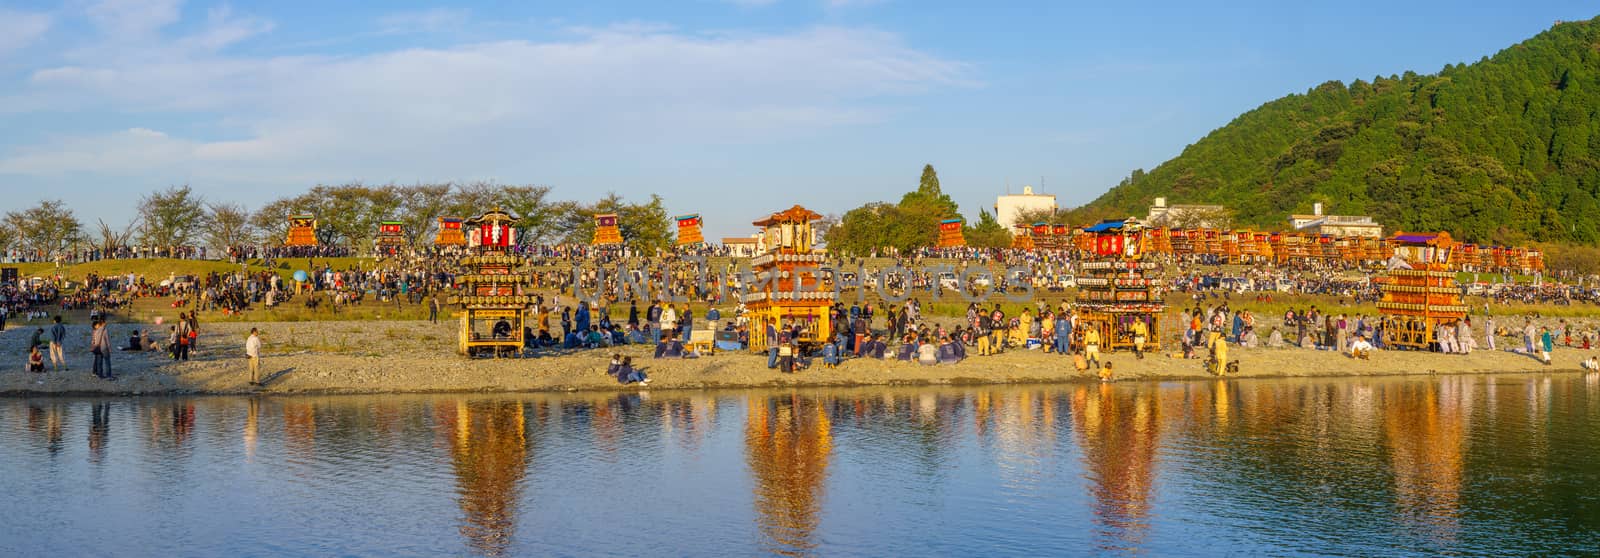 River bank panorama - Saijo Isono Shrine Festival by RnDmS